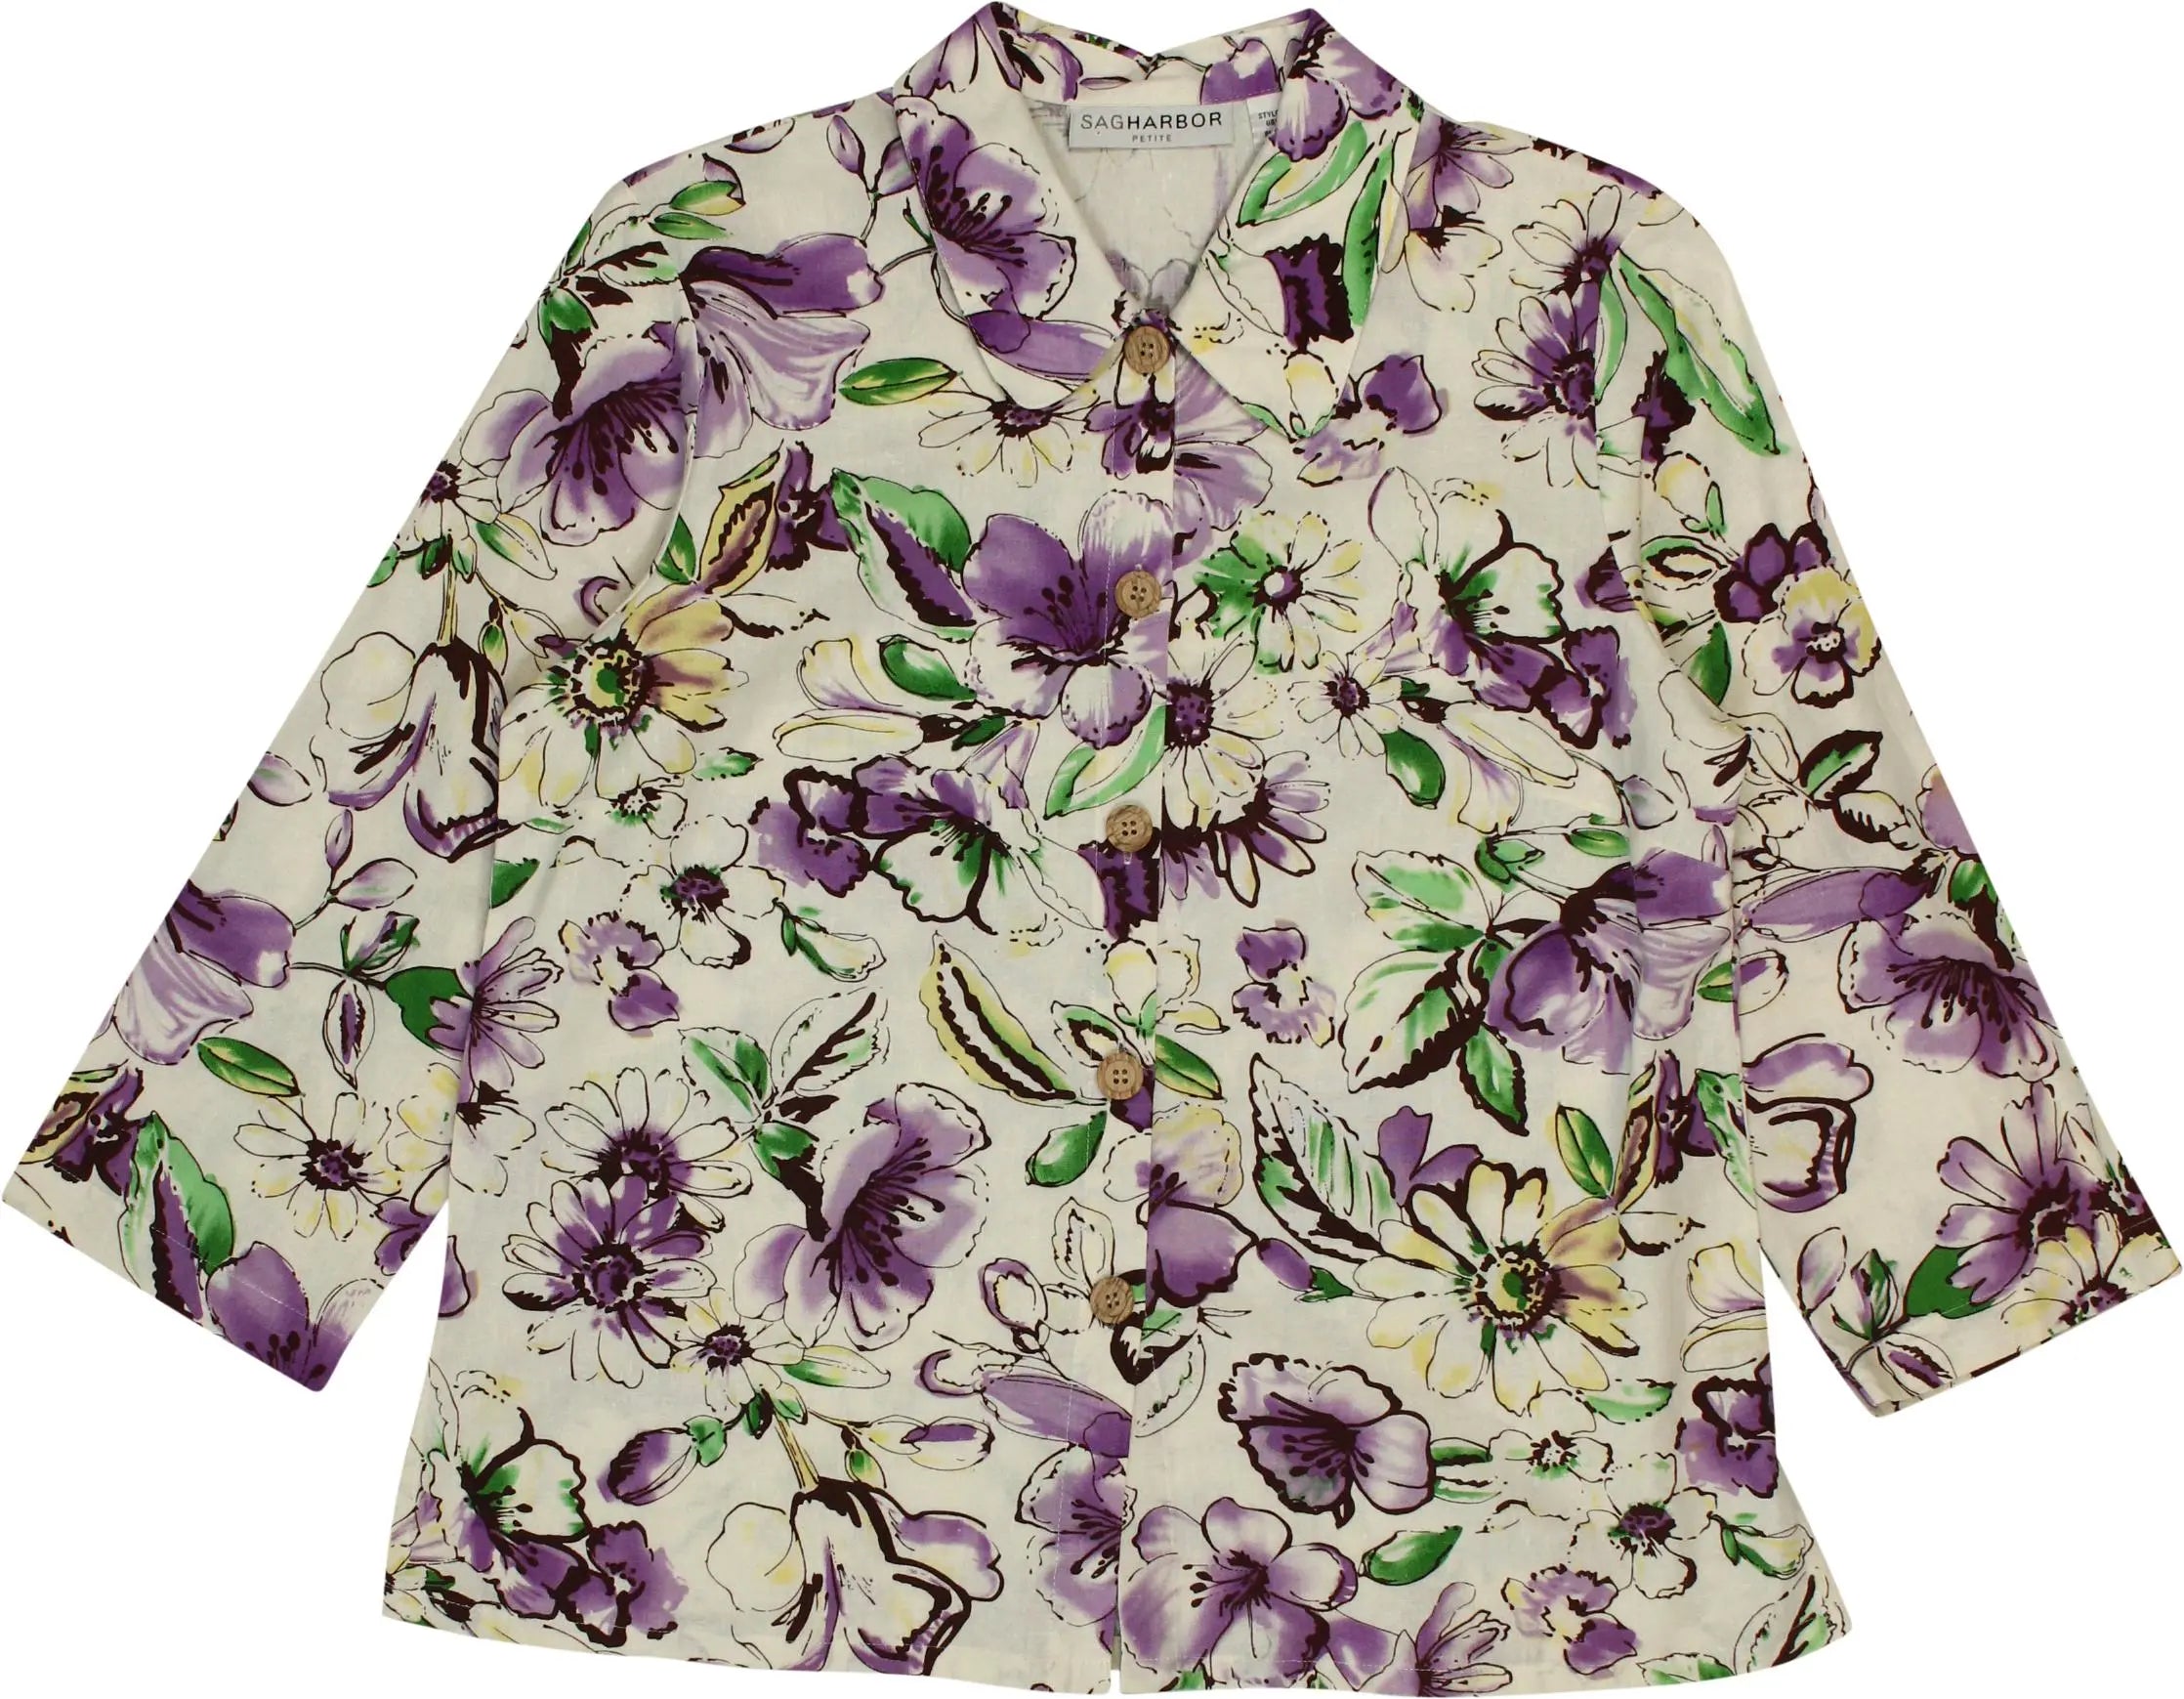 Sag Harbor - Floral Blouse- ThriftTale.com - Vintage and second handclothing